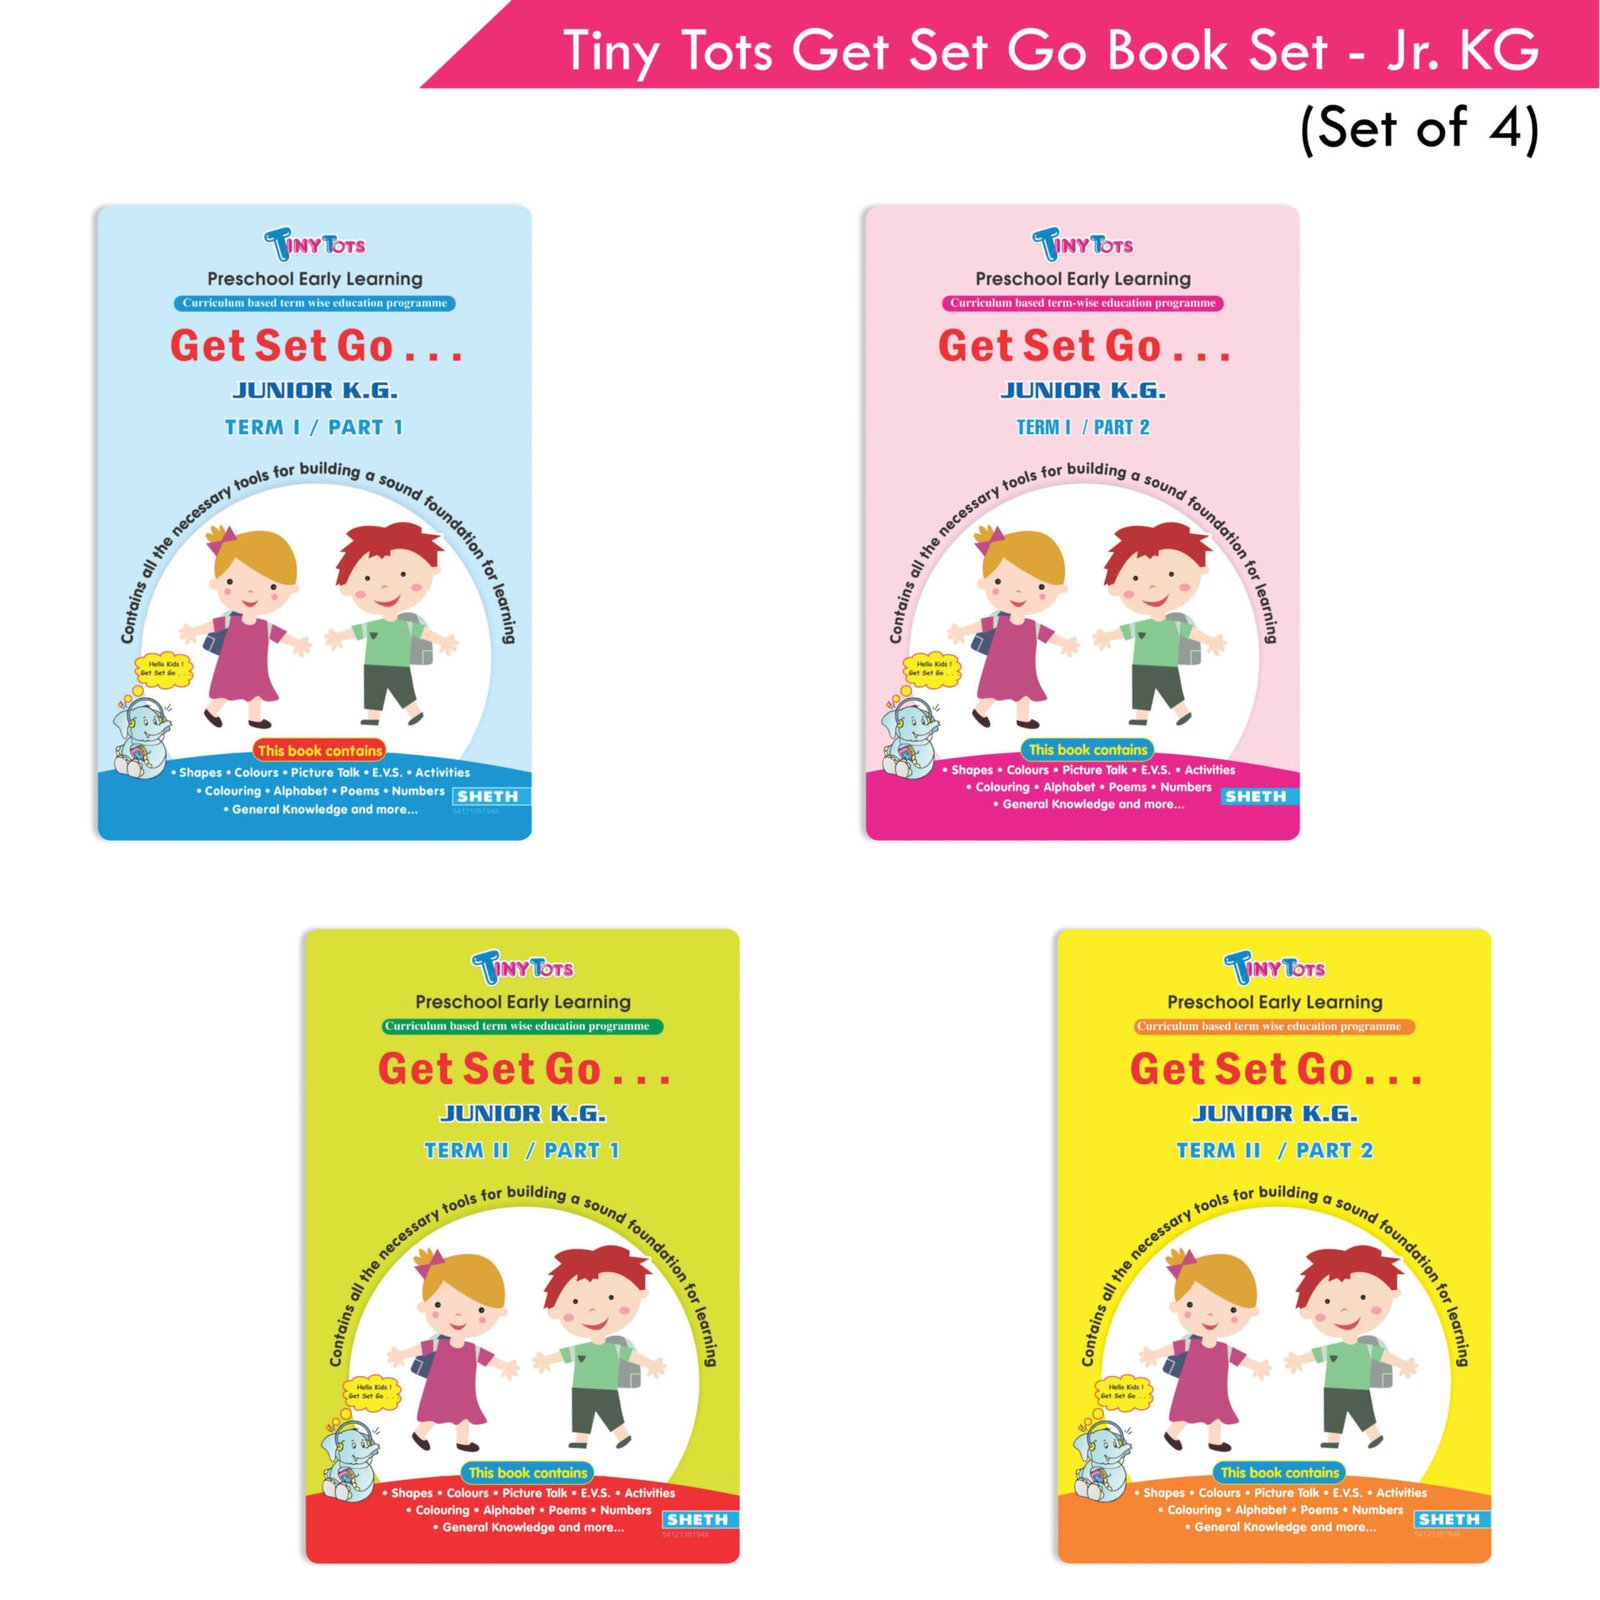 Tiny Tots Get Set Go Book Set Jr. KG Set of 4 1 scaled